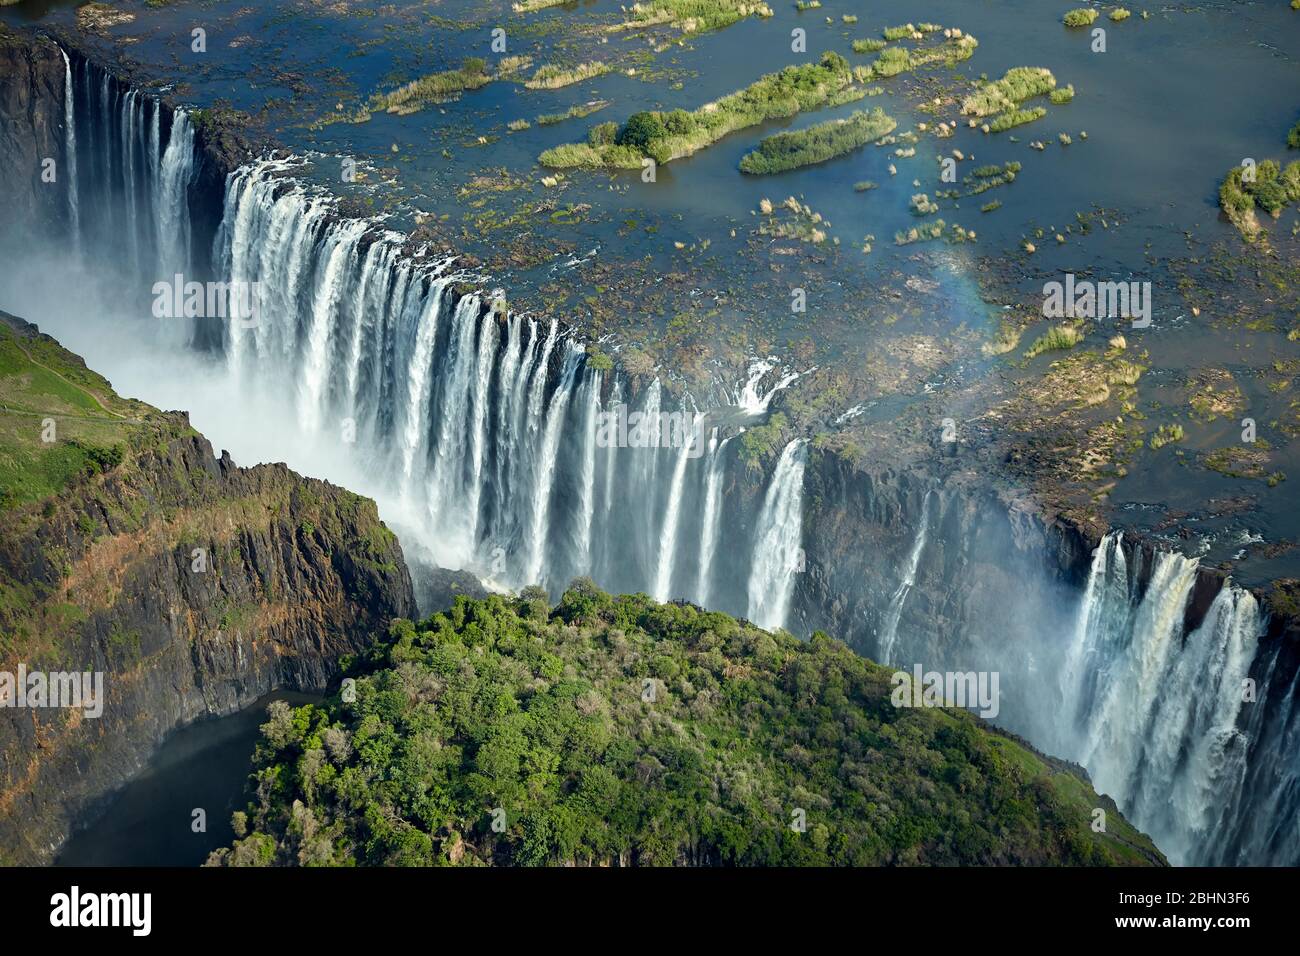 Victoria Falls oder "mosi-oa-Tunya" (der Rauch, der donnert) und Zambezi River, Simbabwe / Zambia Grenze, Südafrika - Luft Stockfoto